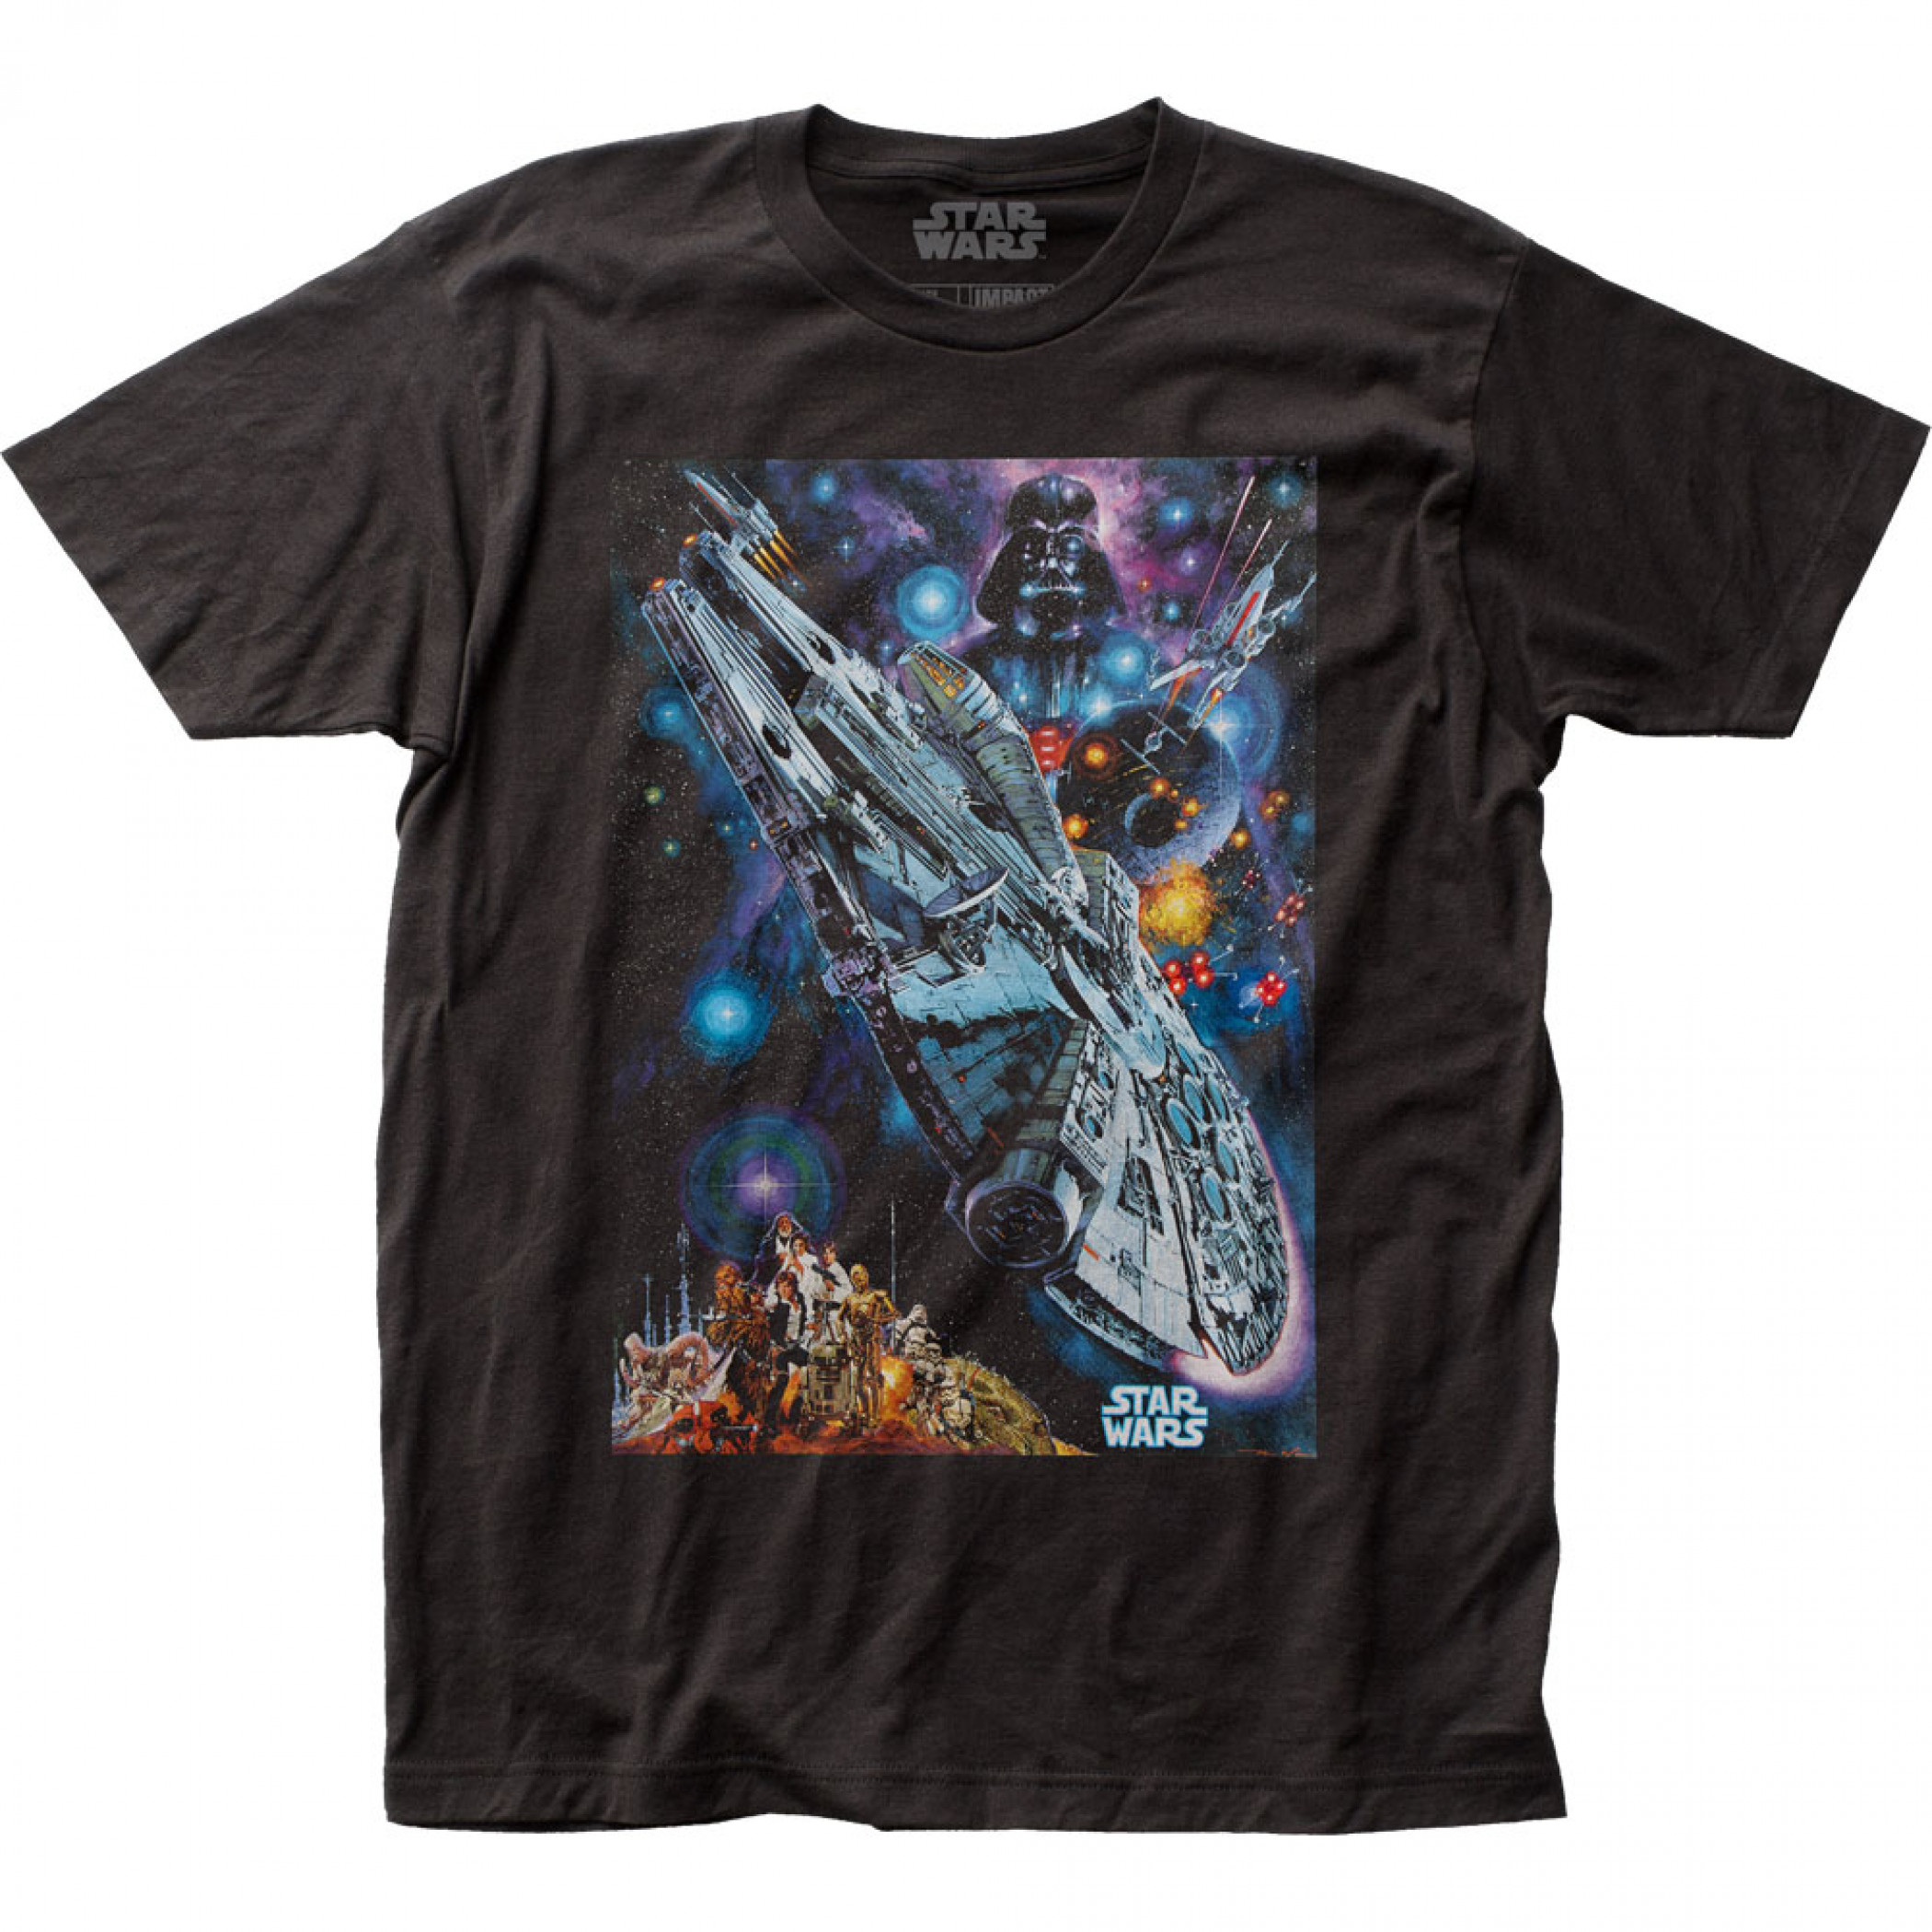 Star Wars Japanese 1978 Poster T-Shirt